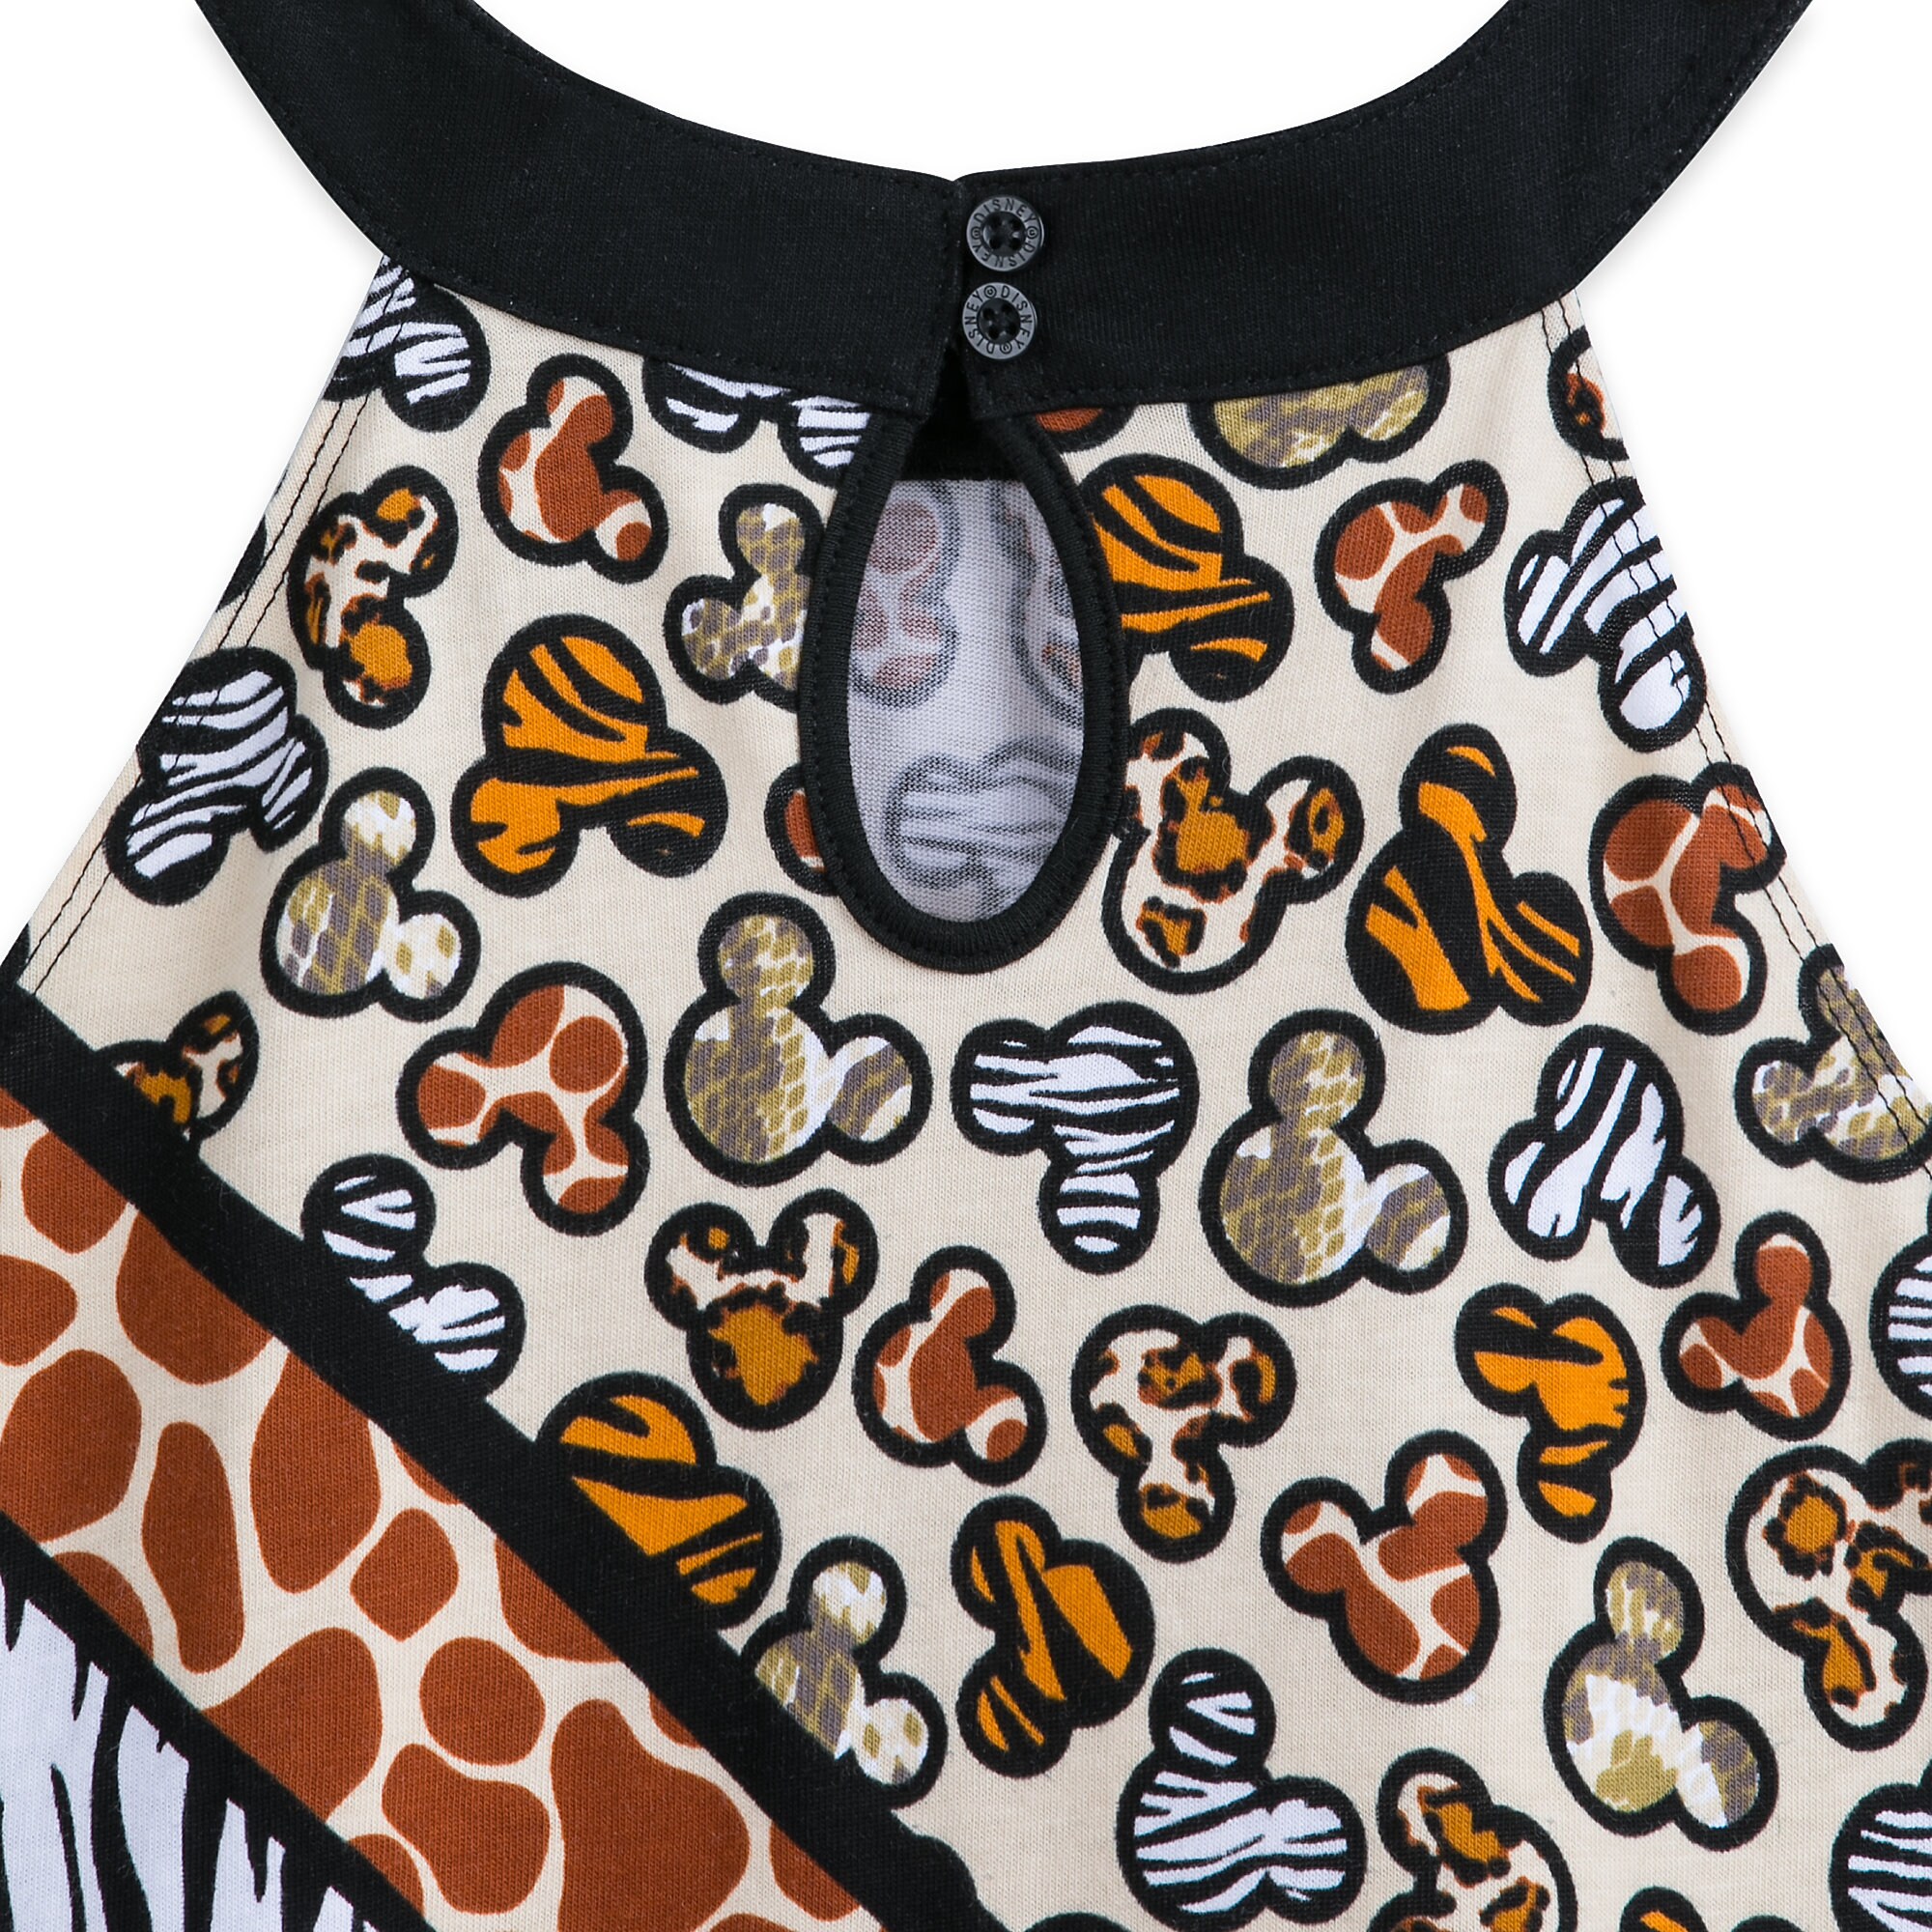 Mickey Mouse Animal Print Dress for Girls - Disney's Animal Kingdom